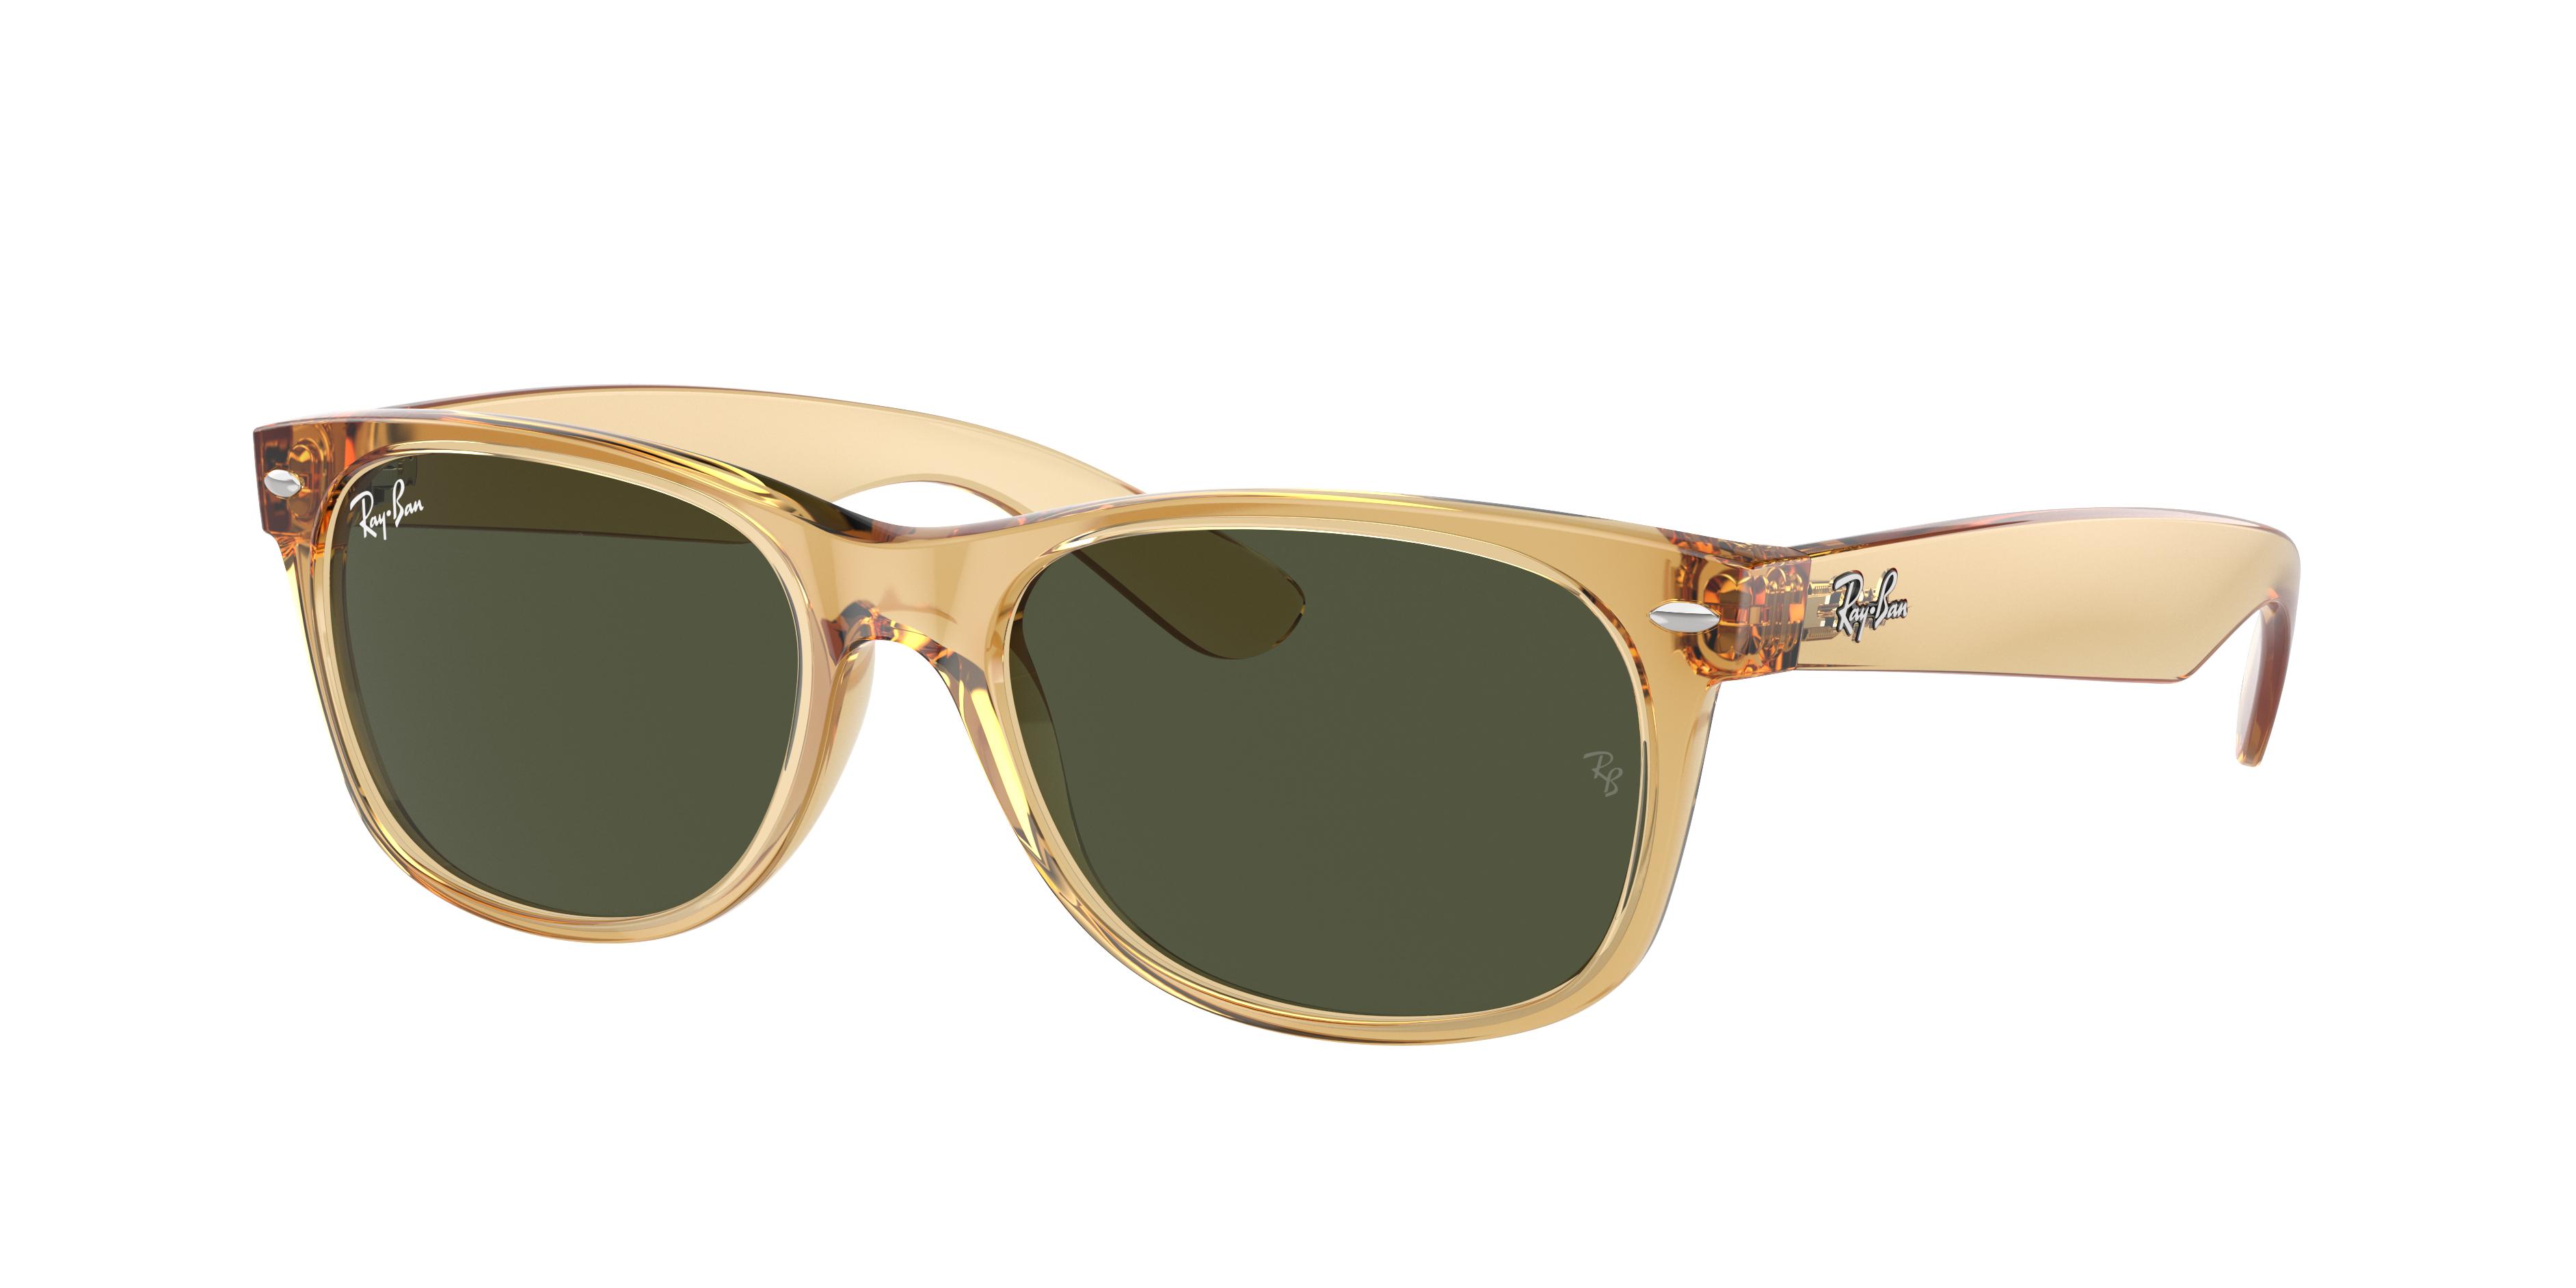 Ray-Ban Sunglasses Unisex New Wayfarer X The Ones - Transparent Light Brown  Frame Green Lenses 55-18 in Black | Lyst